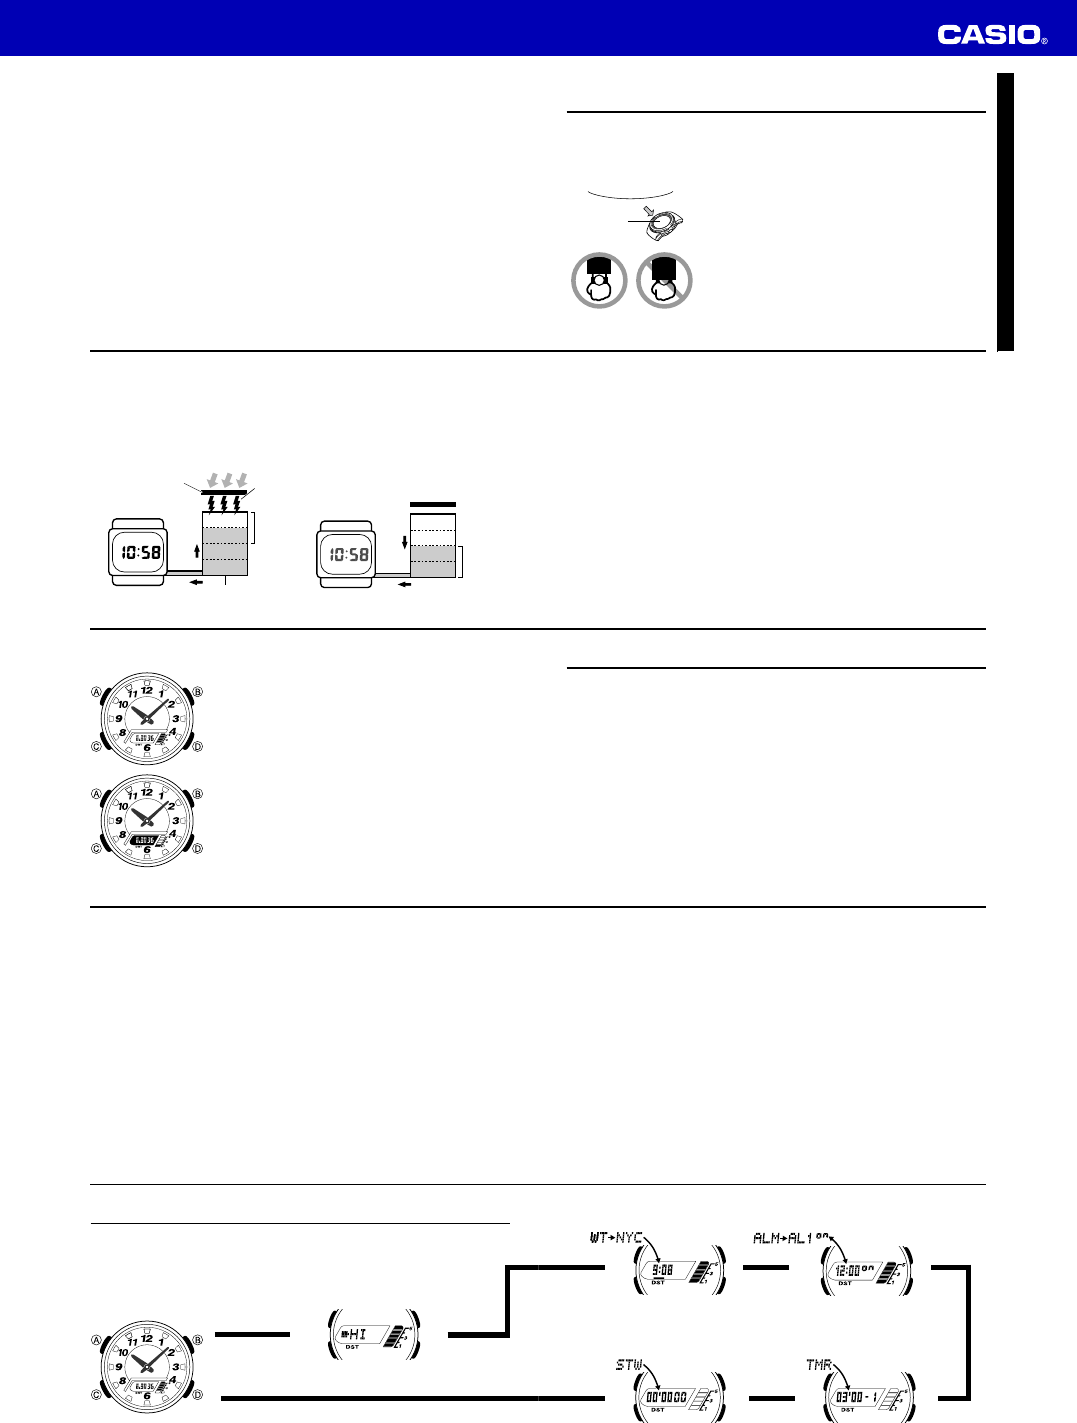 Manual Casio AQ-S800W (page 1 of 6) (English)